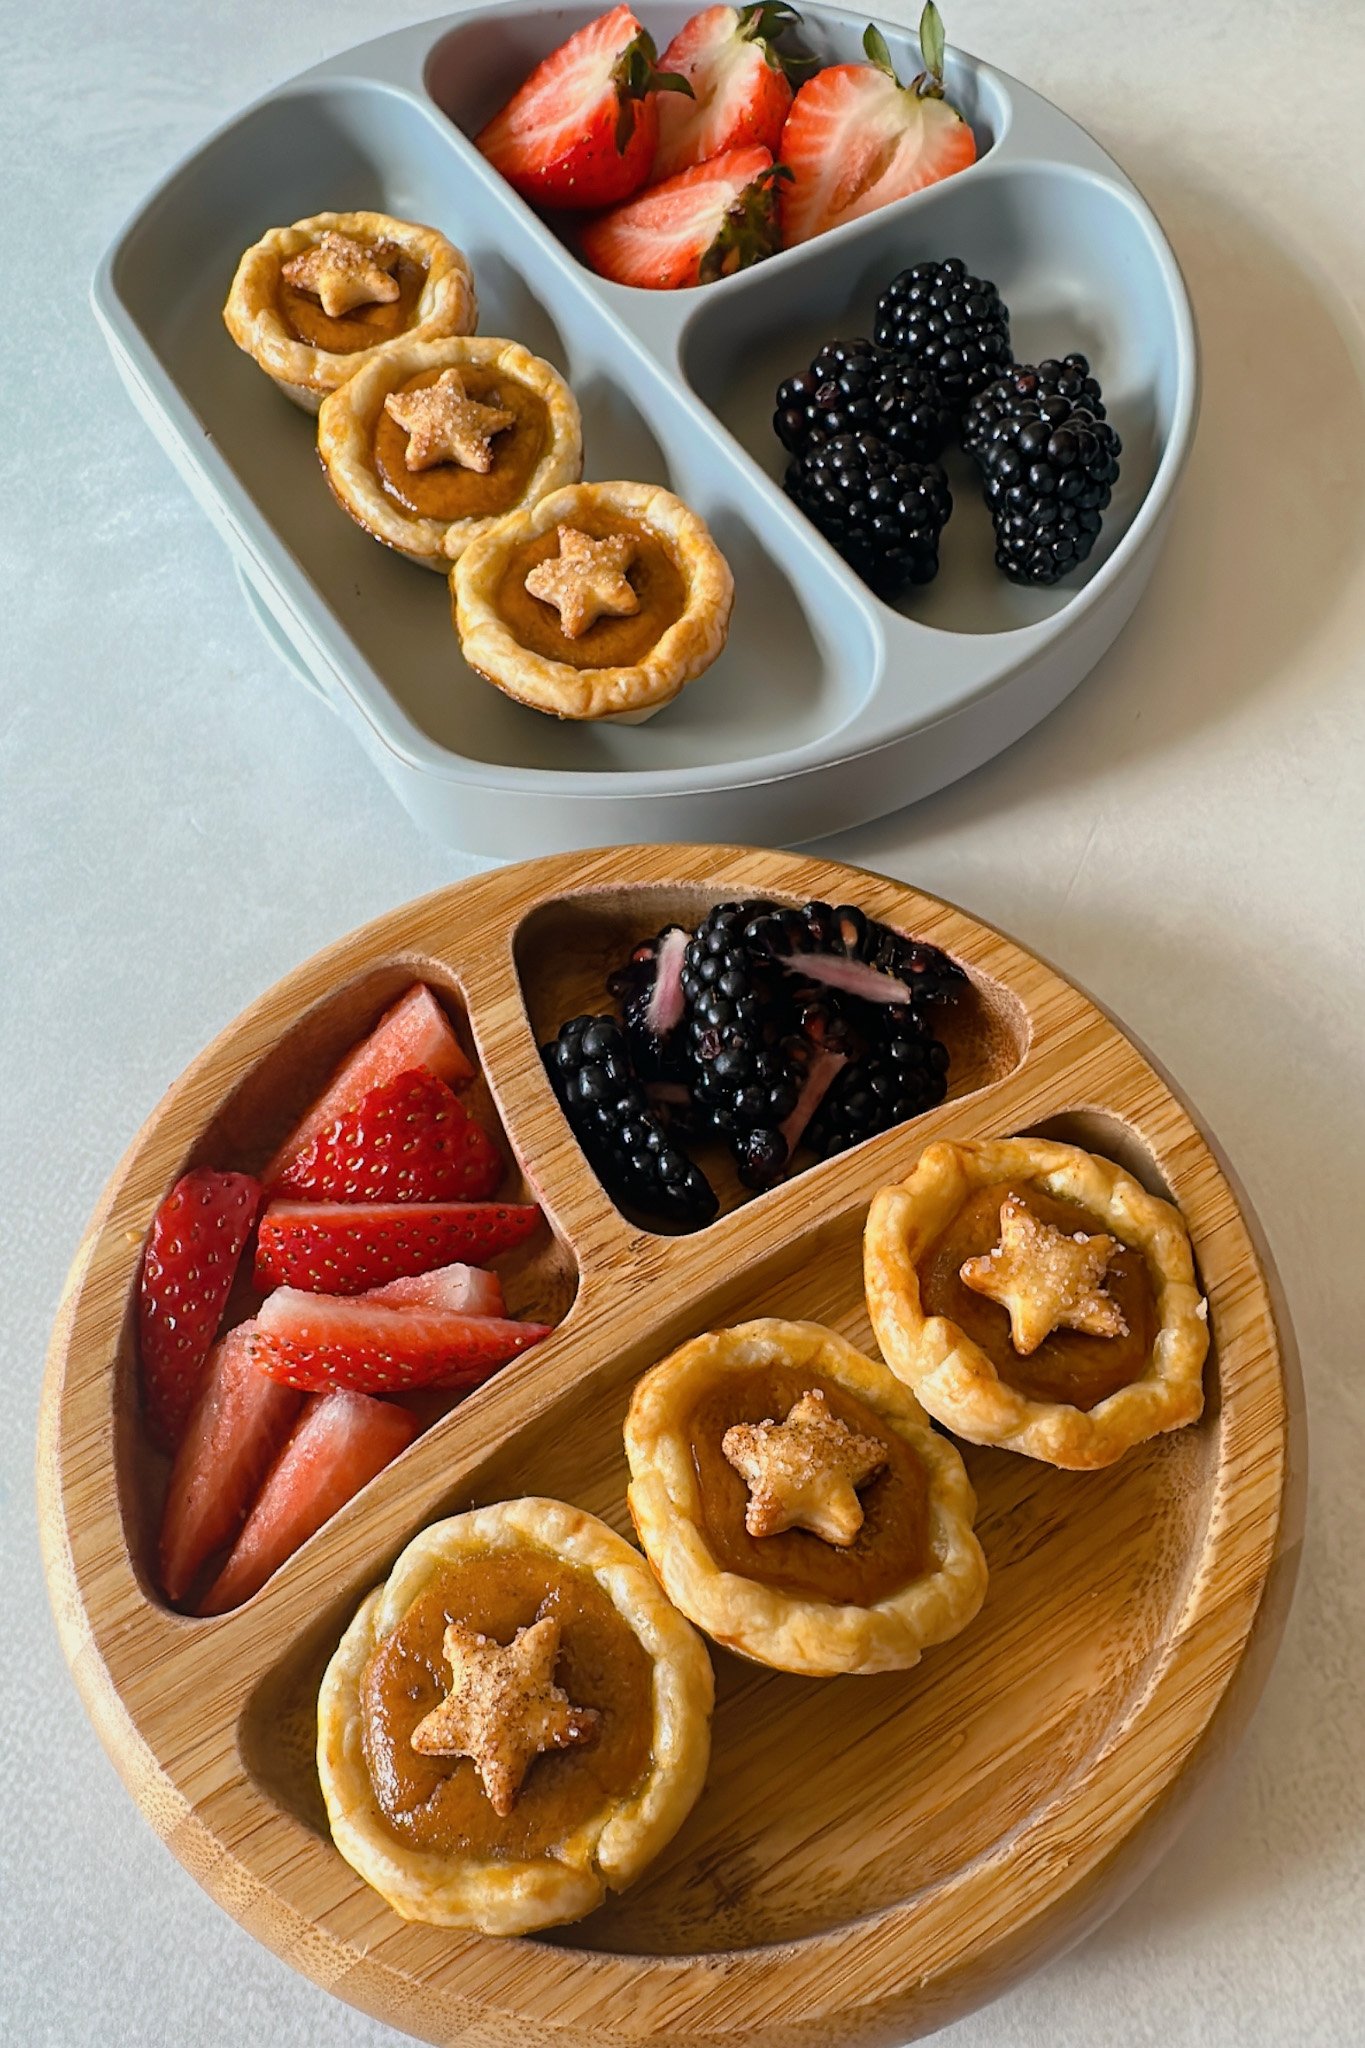 Maple sweetened mini pumpkin pies served with strawberries and blackberries.